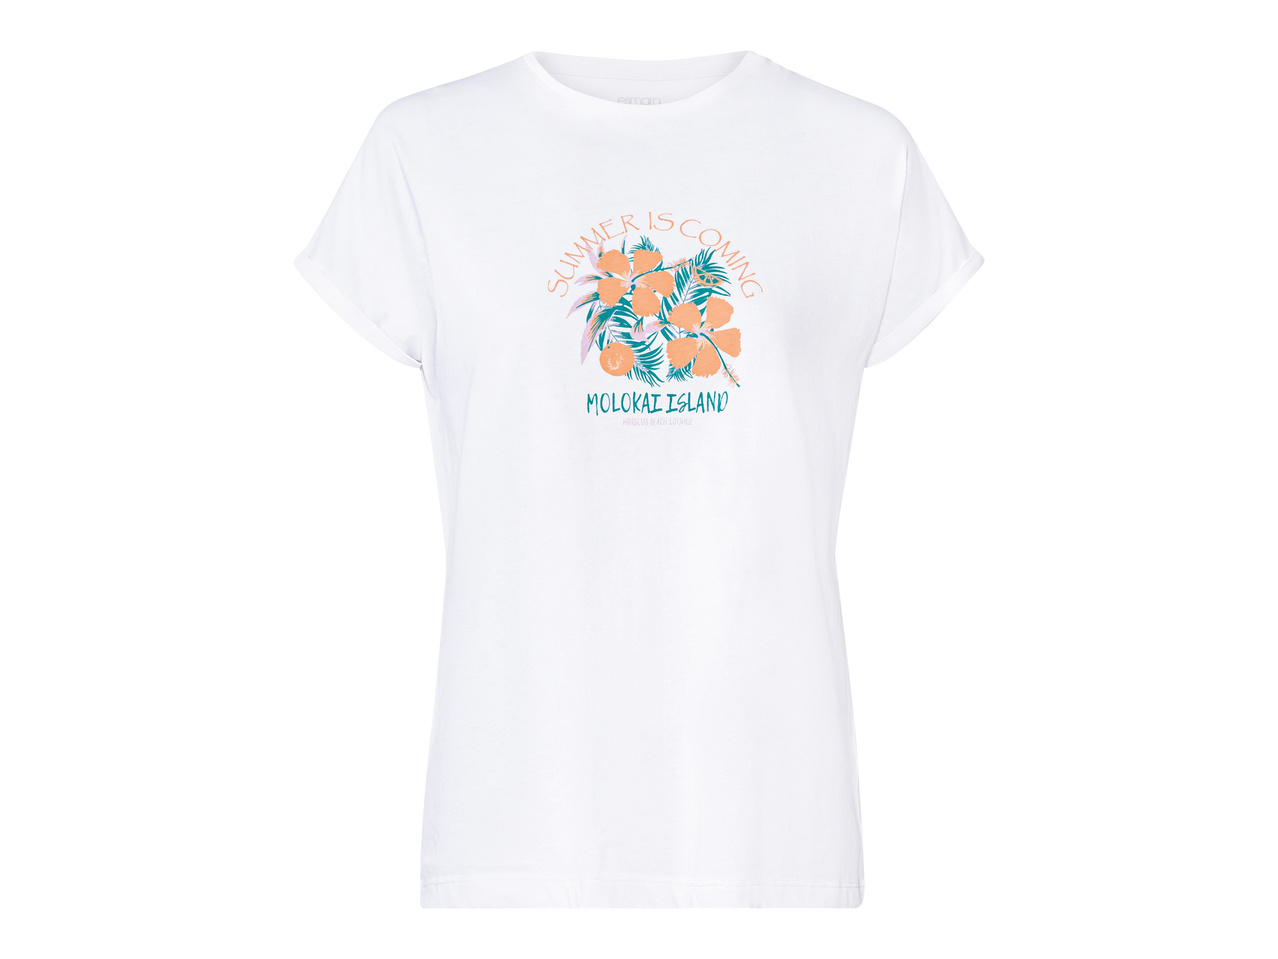 T-shirt da donna , prezzo 4.99 EUR  
T-shirt da donna  Misure: S-L  
-  Puro cotone